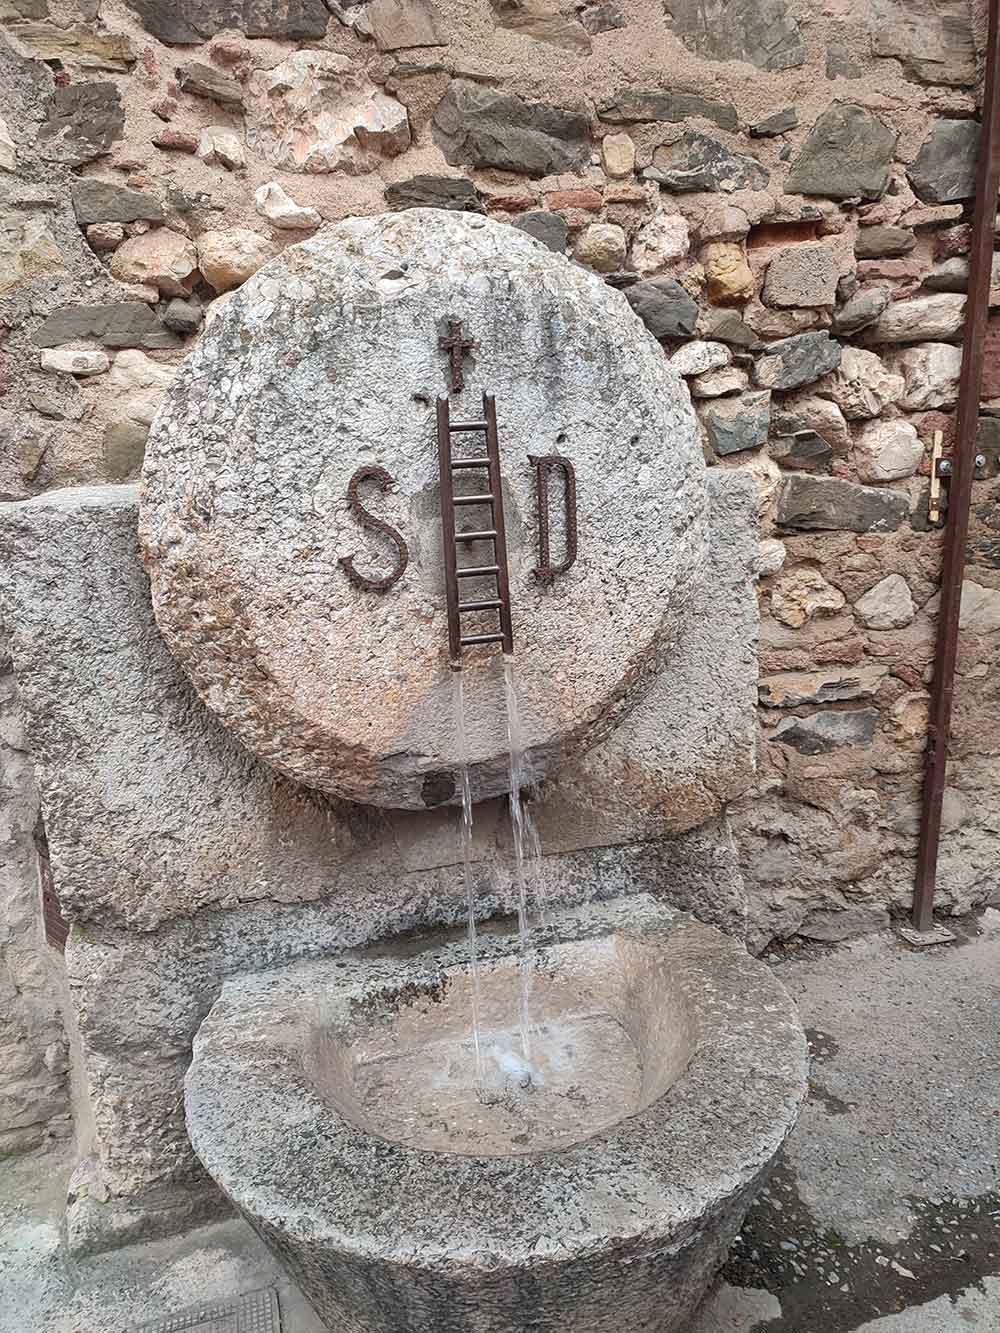 A stone sculpture at Scala Dei